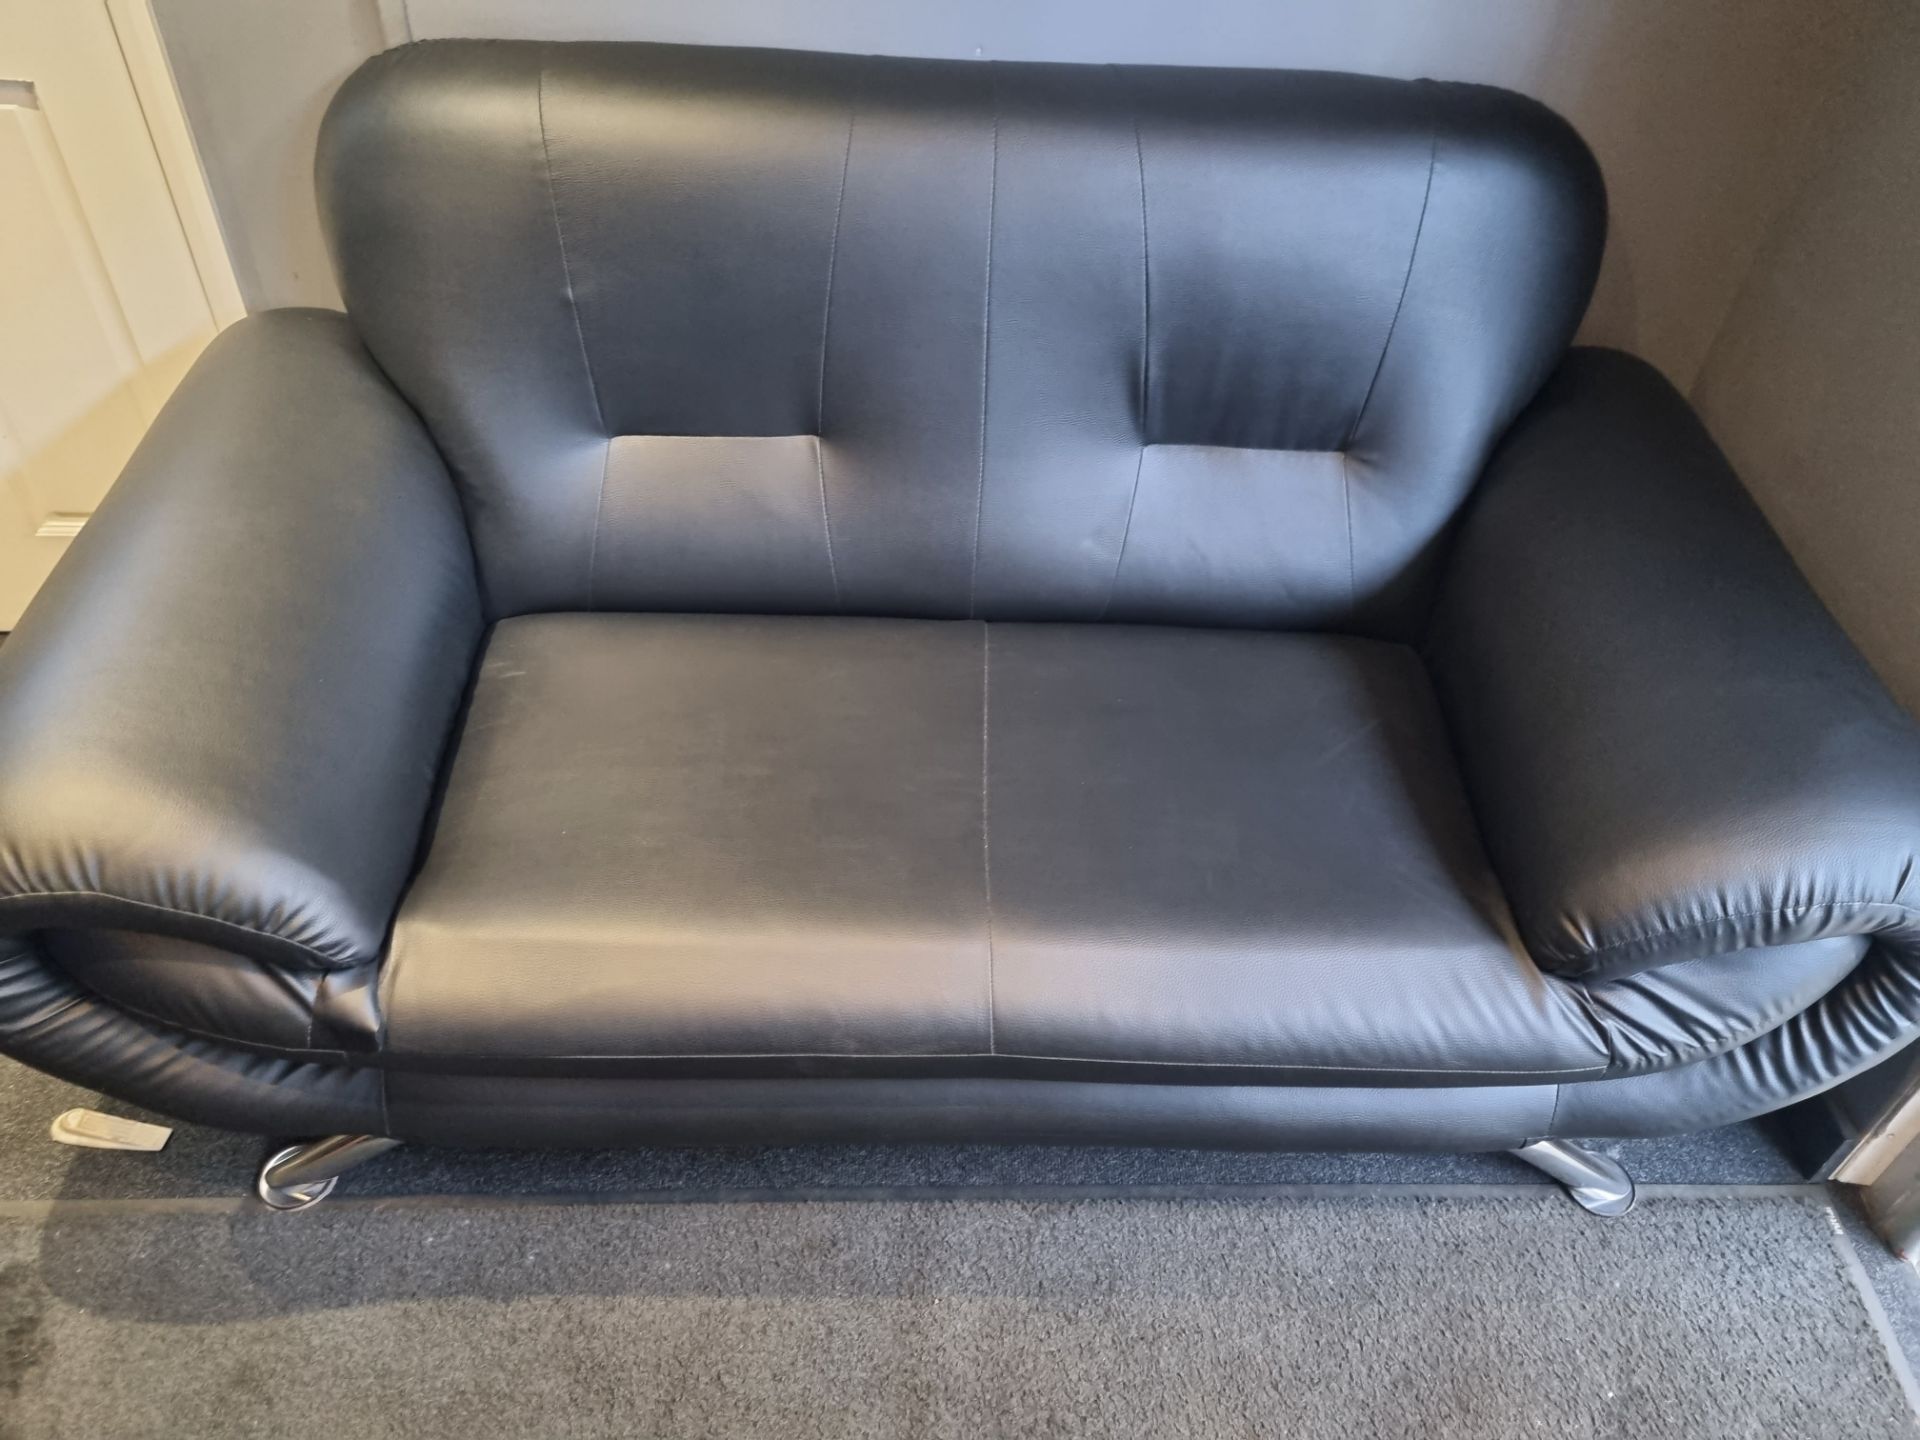 1 x 2 seater Black Leather Sofa